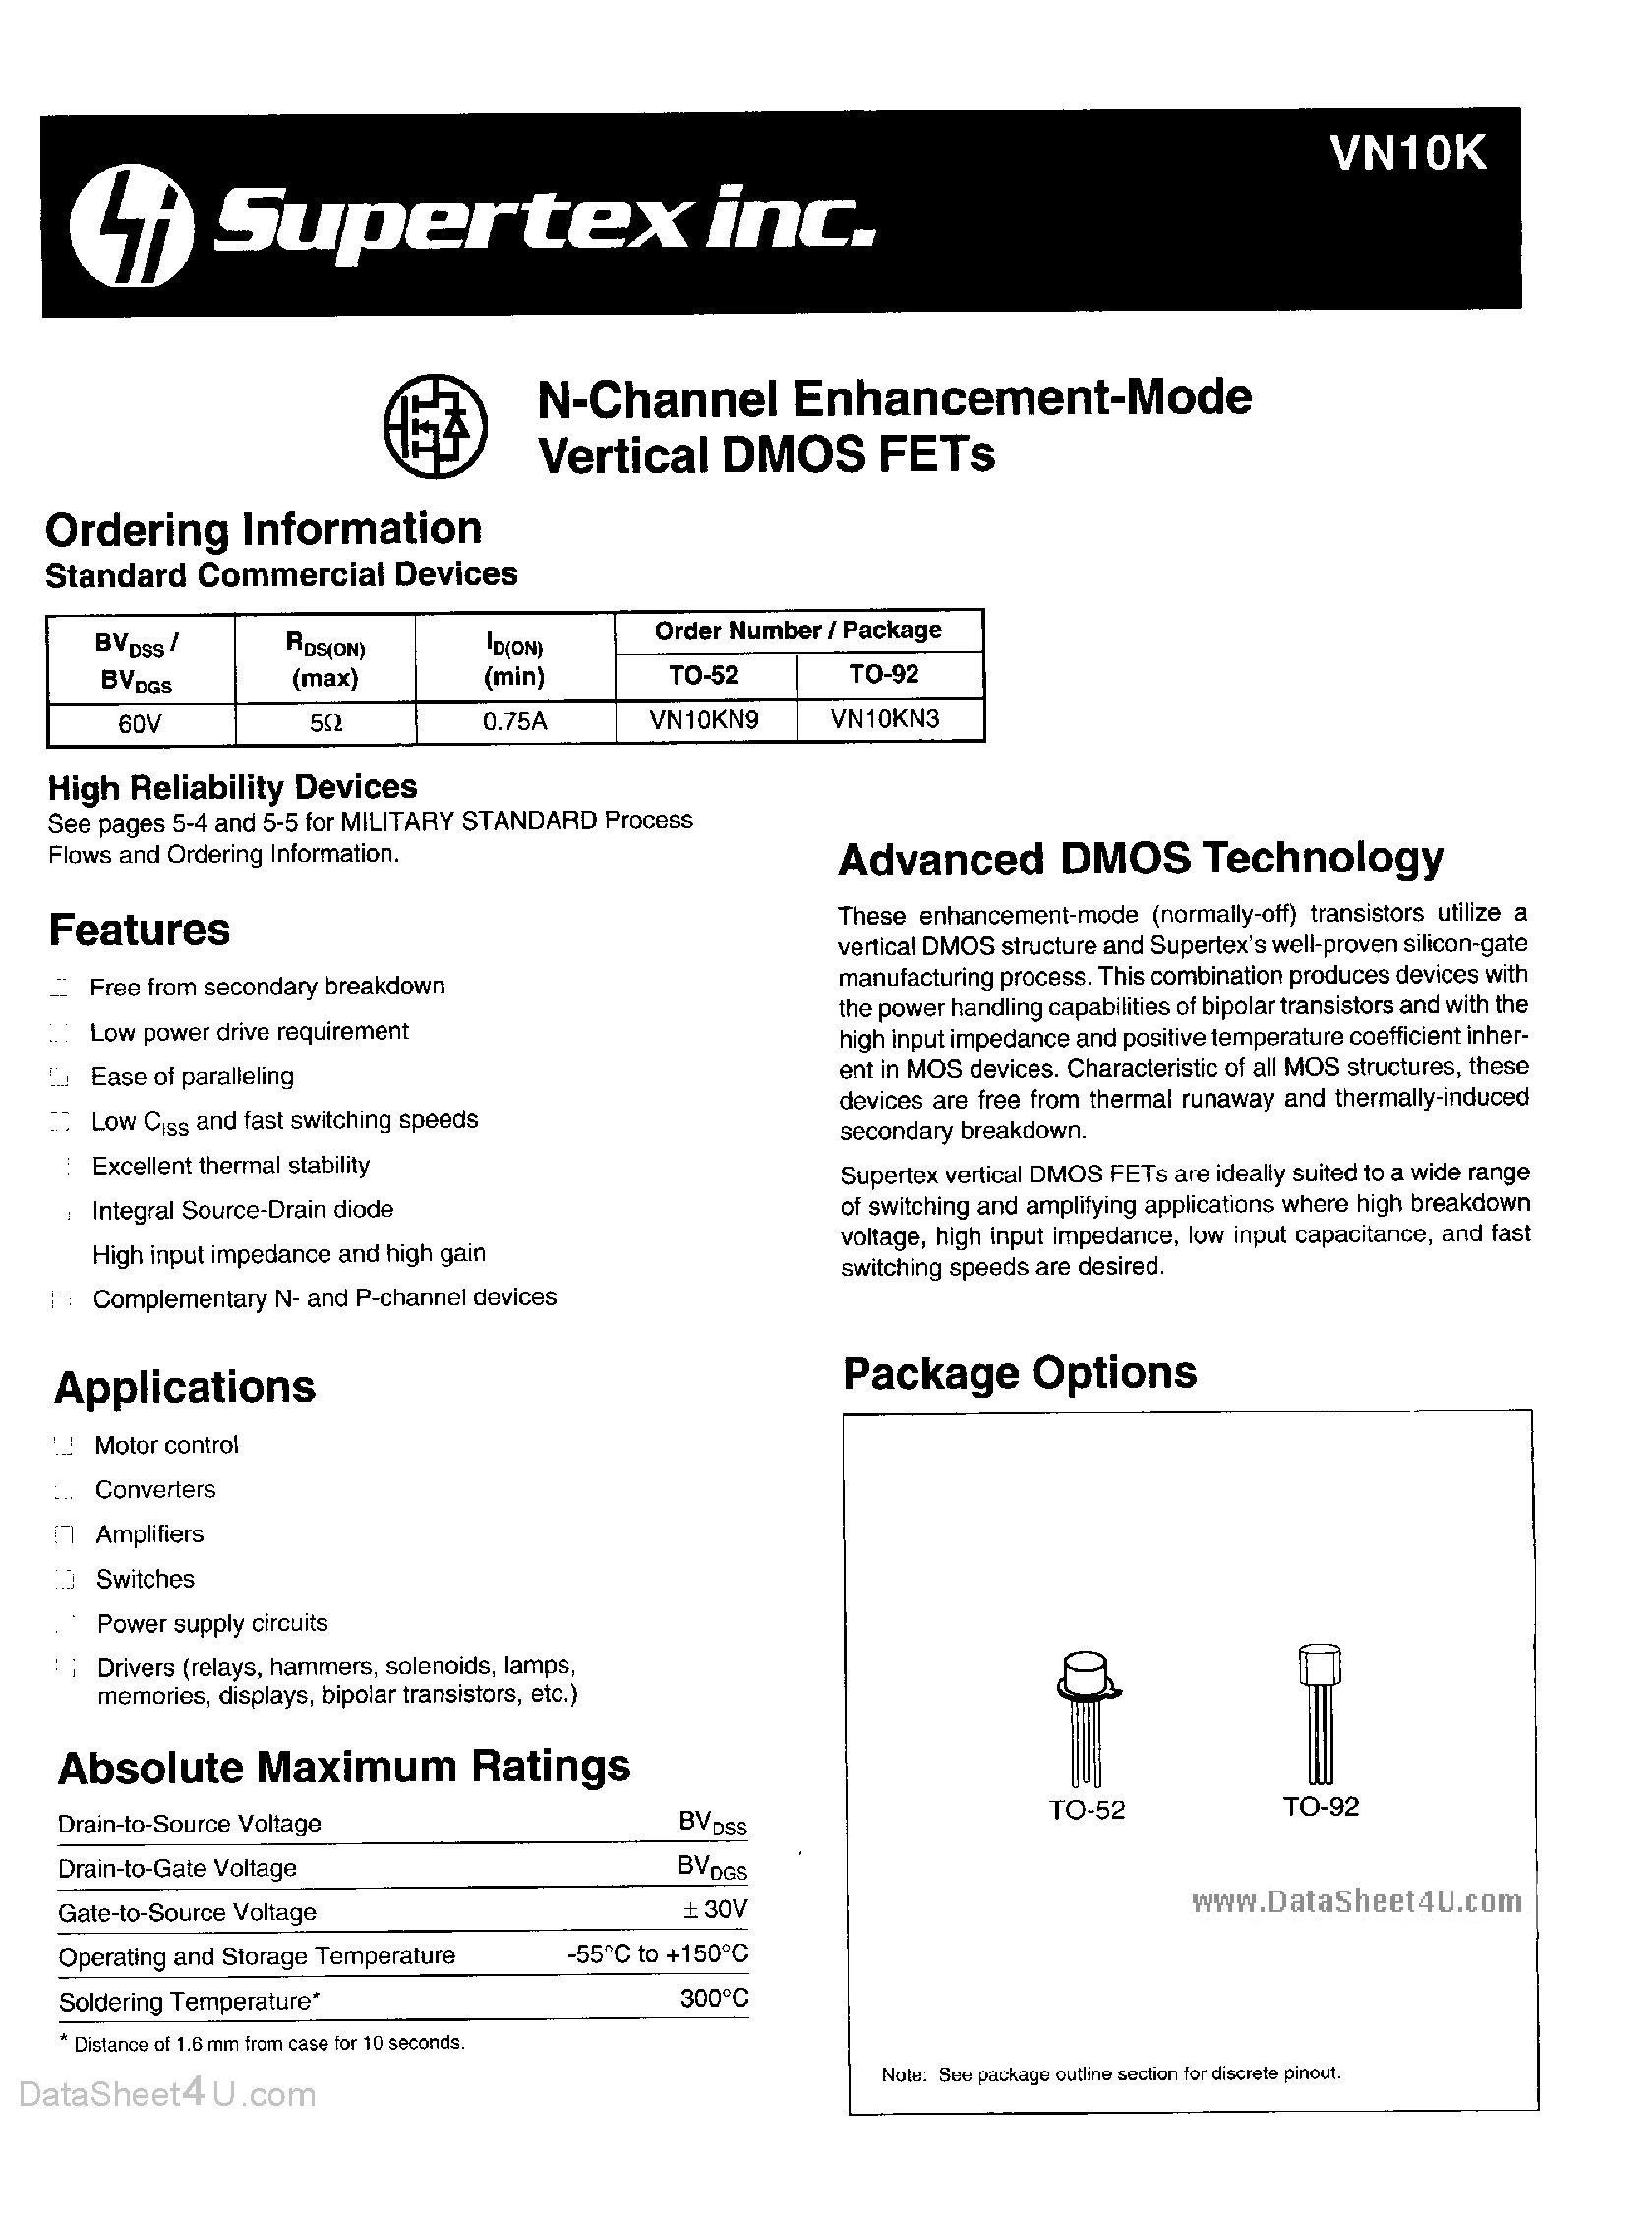 Даташит VN10KN9 - N-Channel Enhancement Mode Vertical D-MOS FETs страница 1